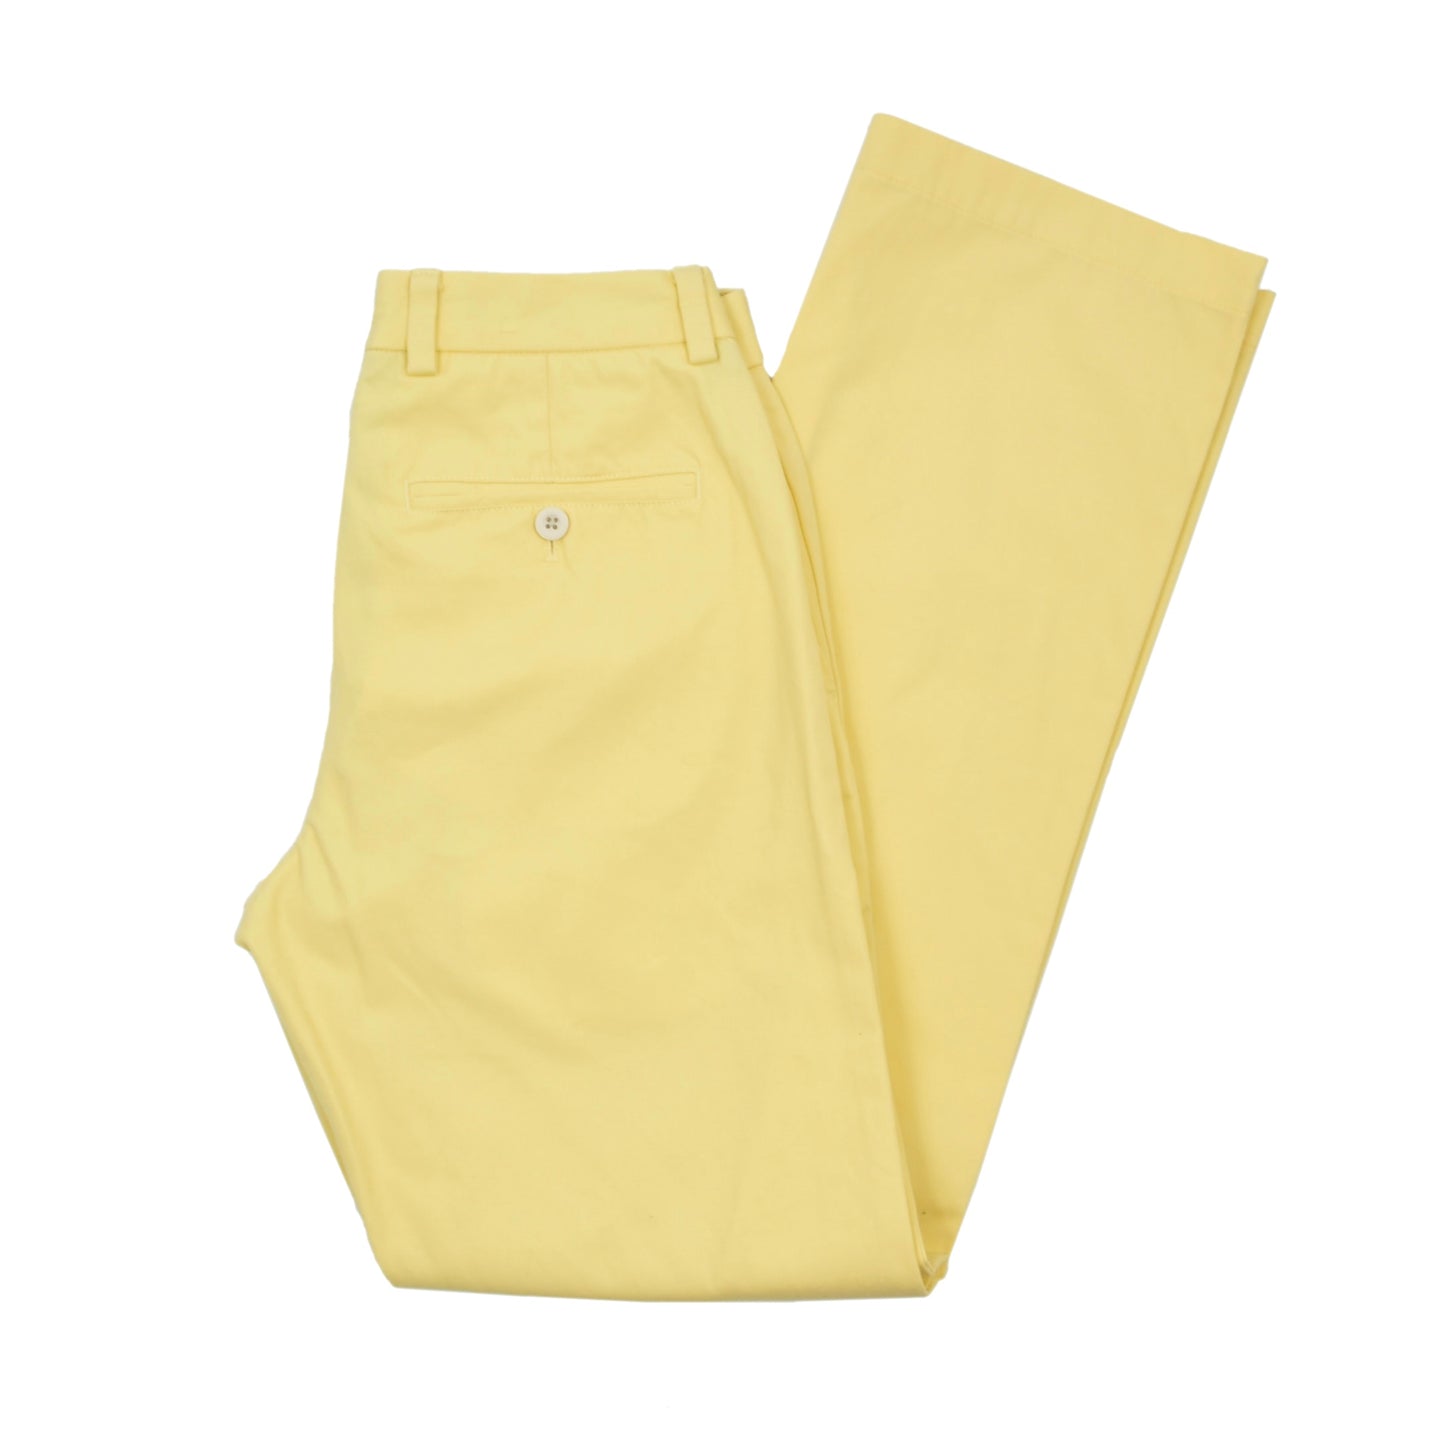 Vineyard Vines Slim Fit Breaker Pants Size W28 L34 - Canary Yellow